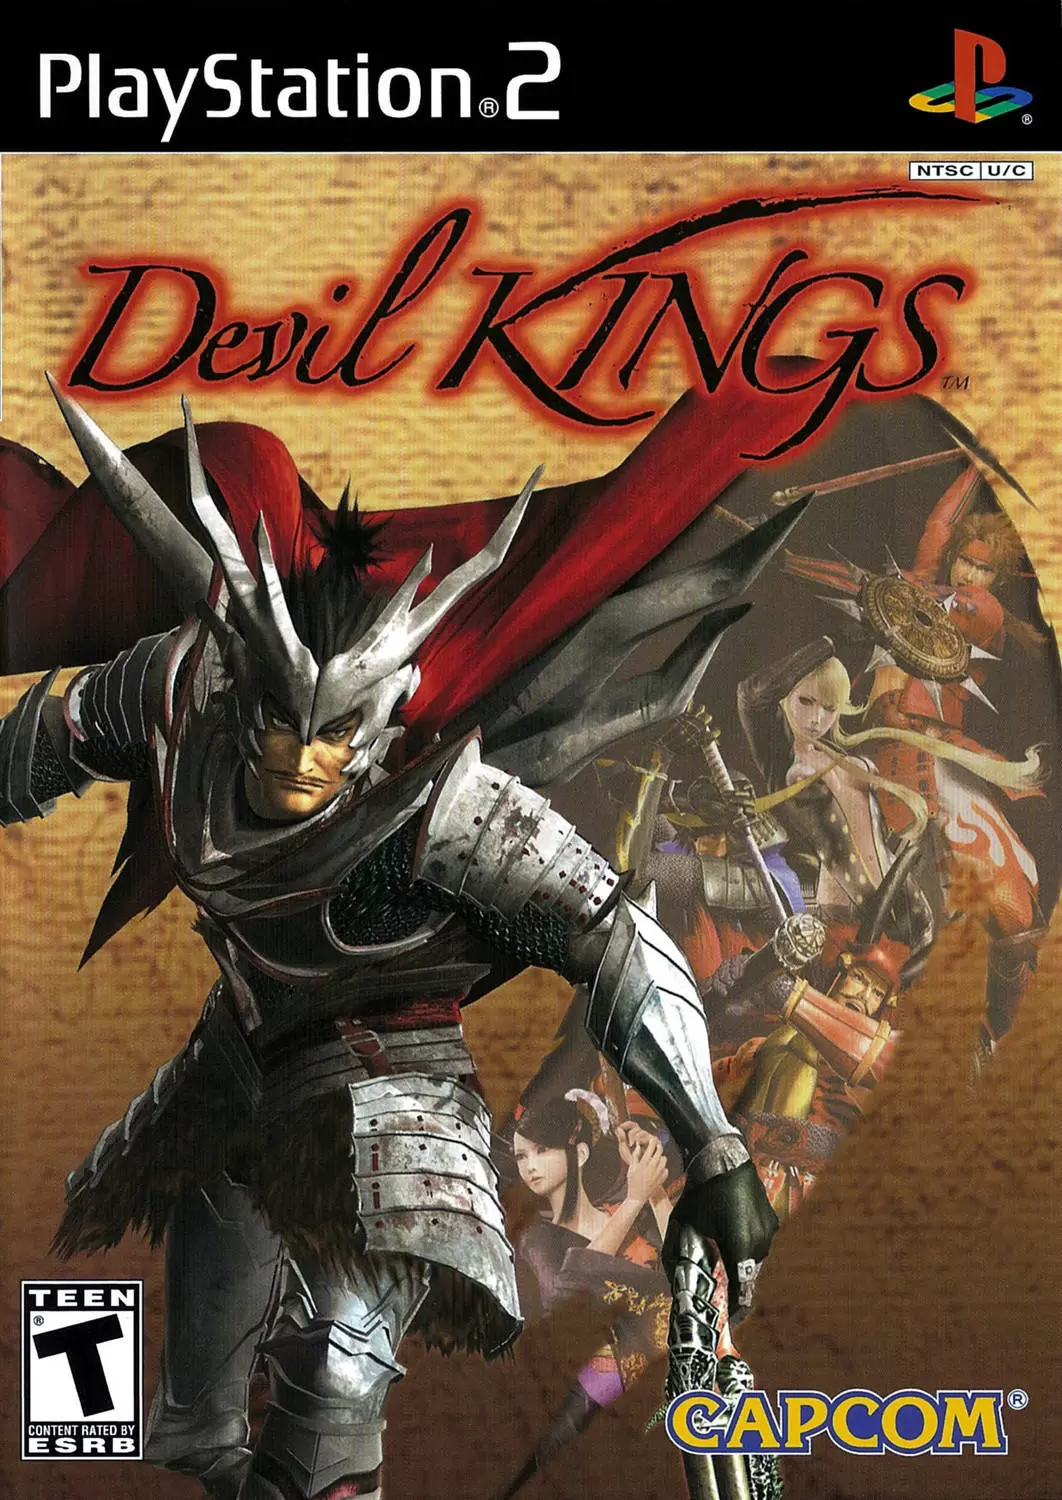 PS2 Games - Devil Kings